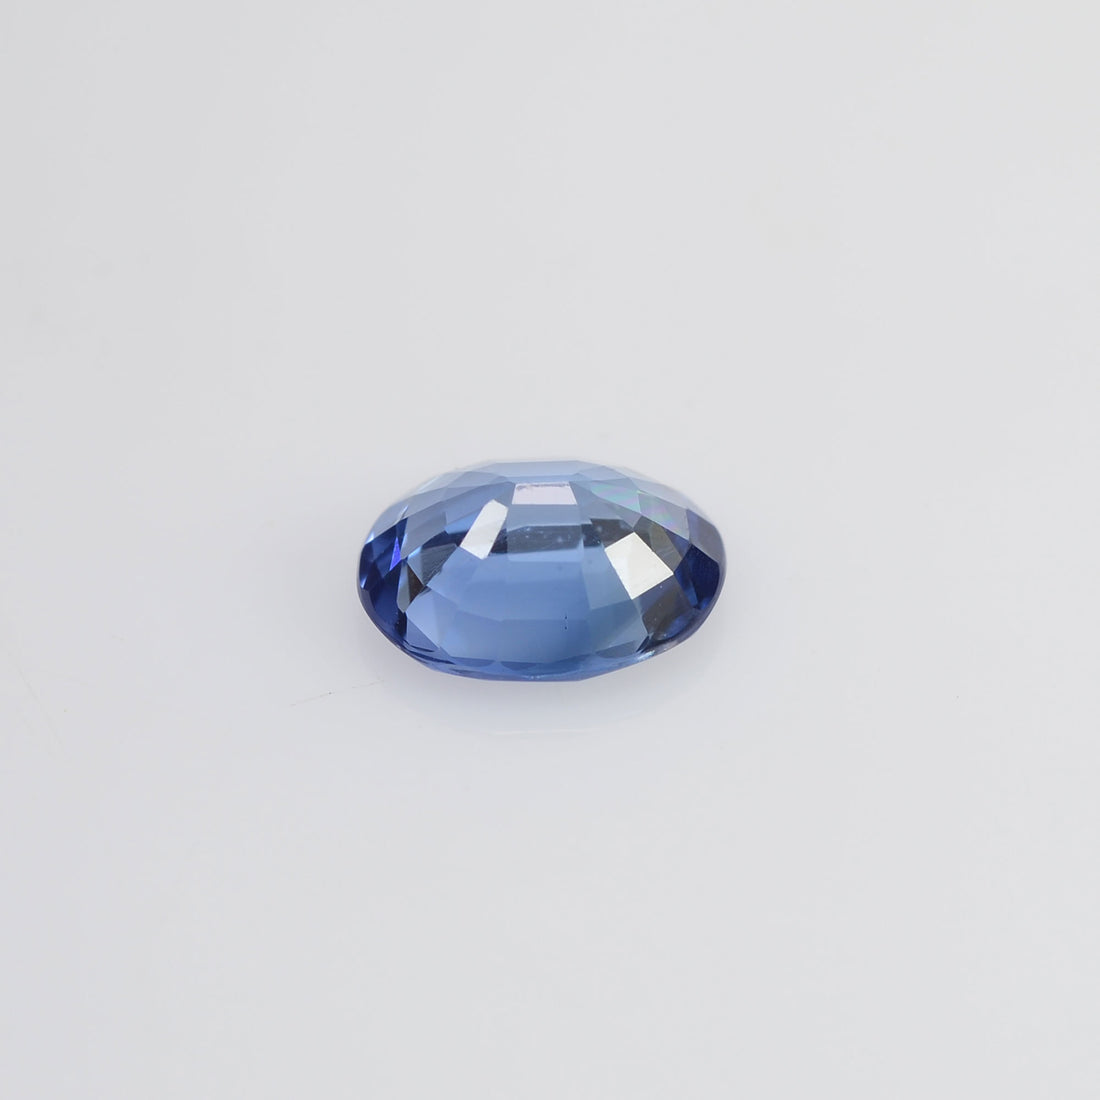 0.78 Cts Natural Blue Sapphire Loose Gemstone Oval Cut - Thai Gems Export Ltd.